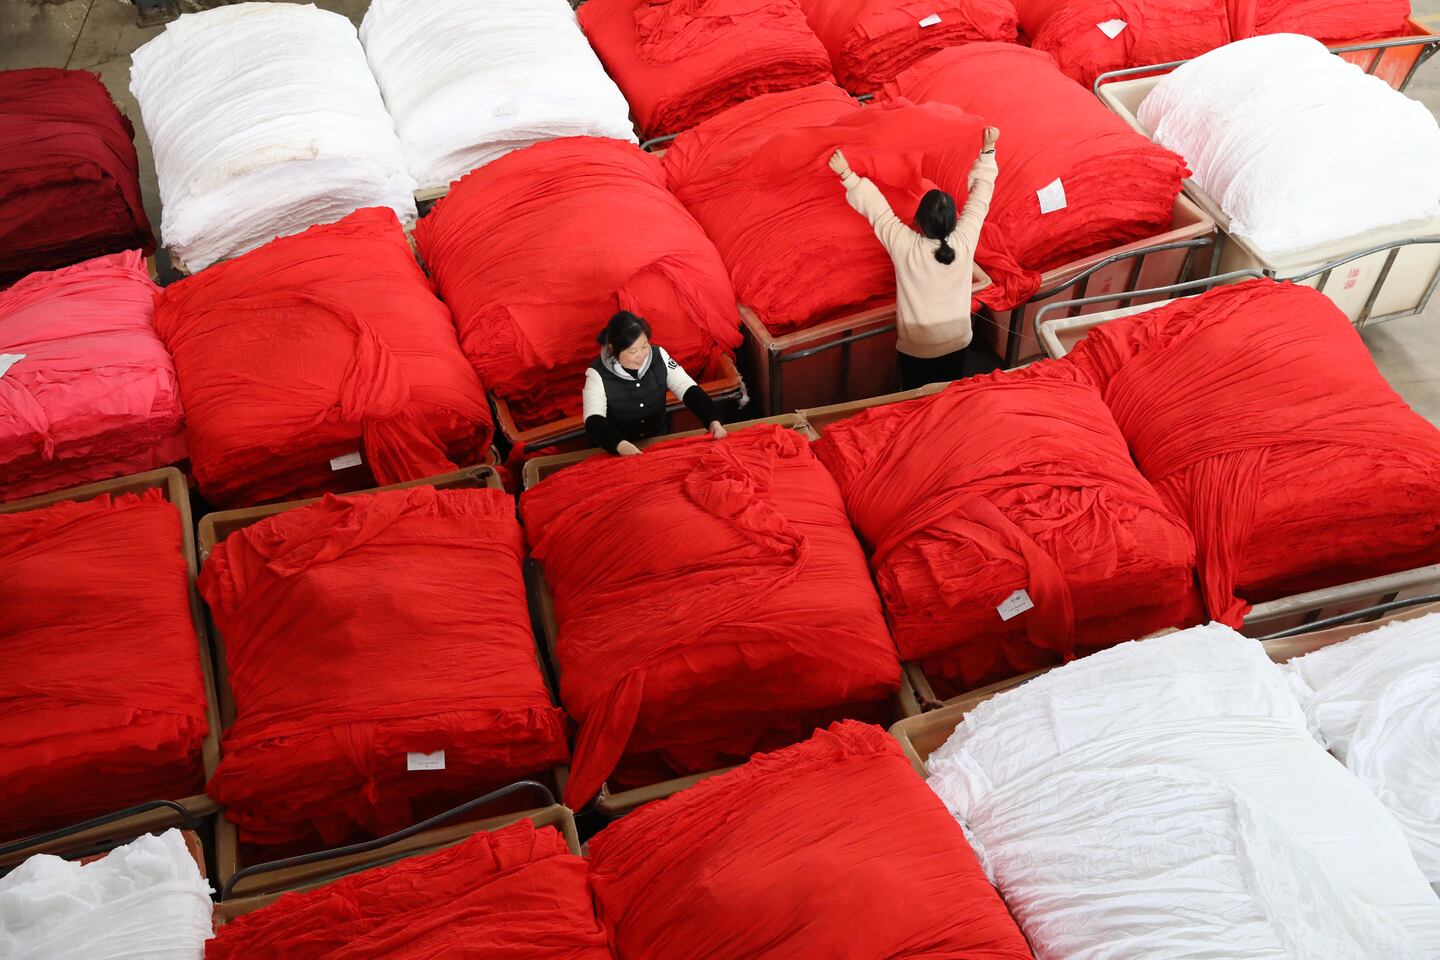 Workers in a fabric dye factory in Hangzhou, China.